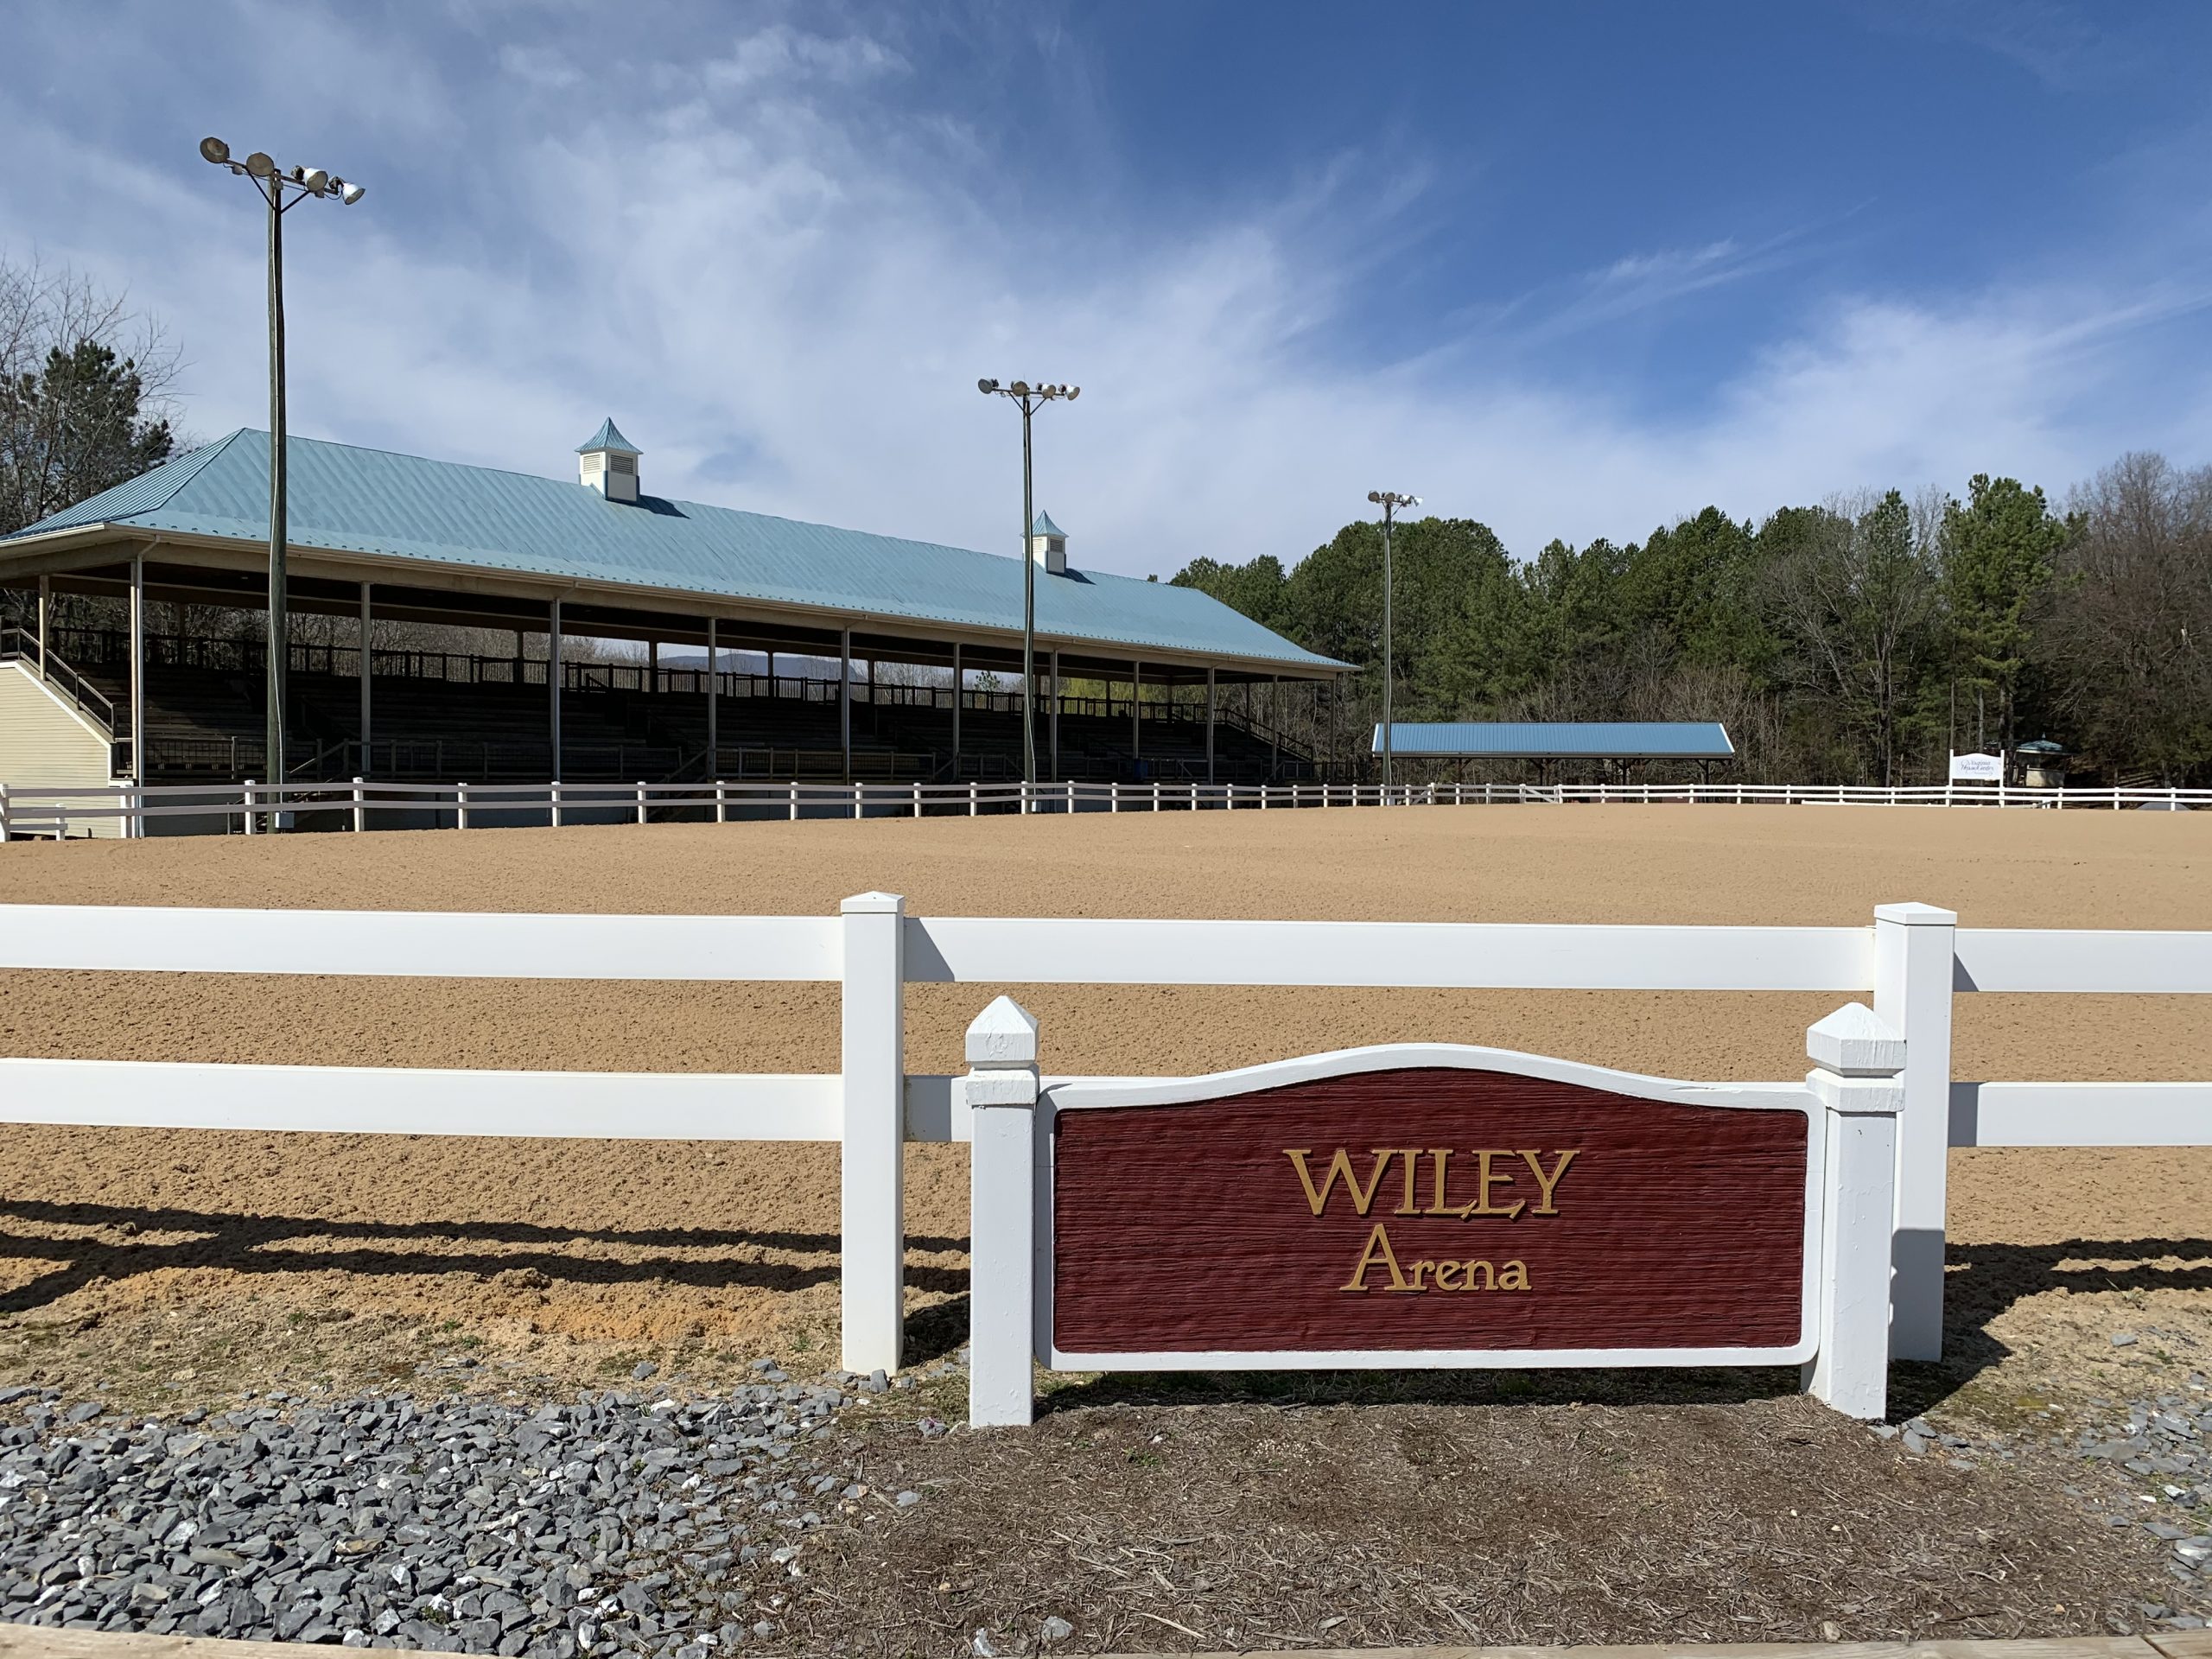 Virginia Horse Center In Lexington Sees Financial Benefits From Horse